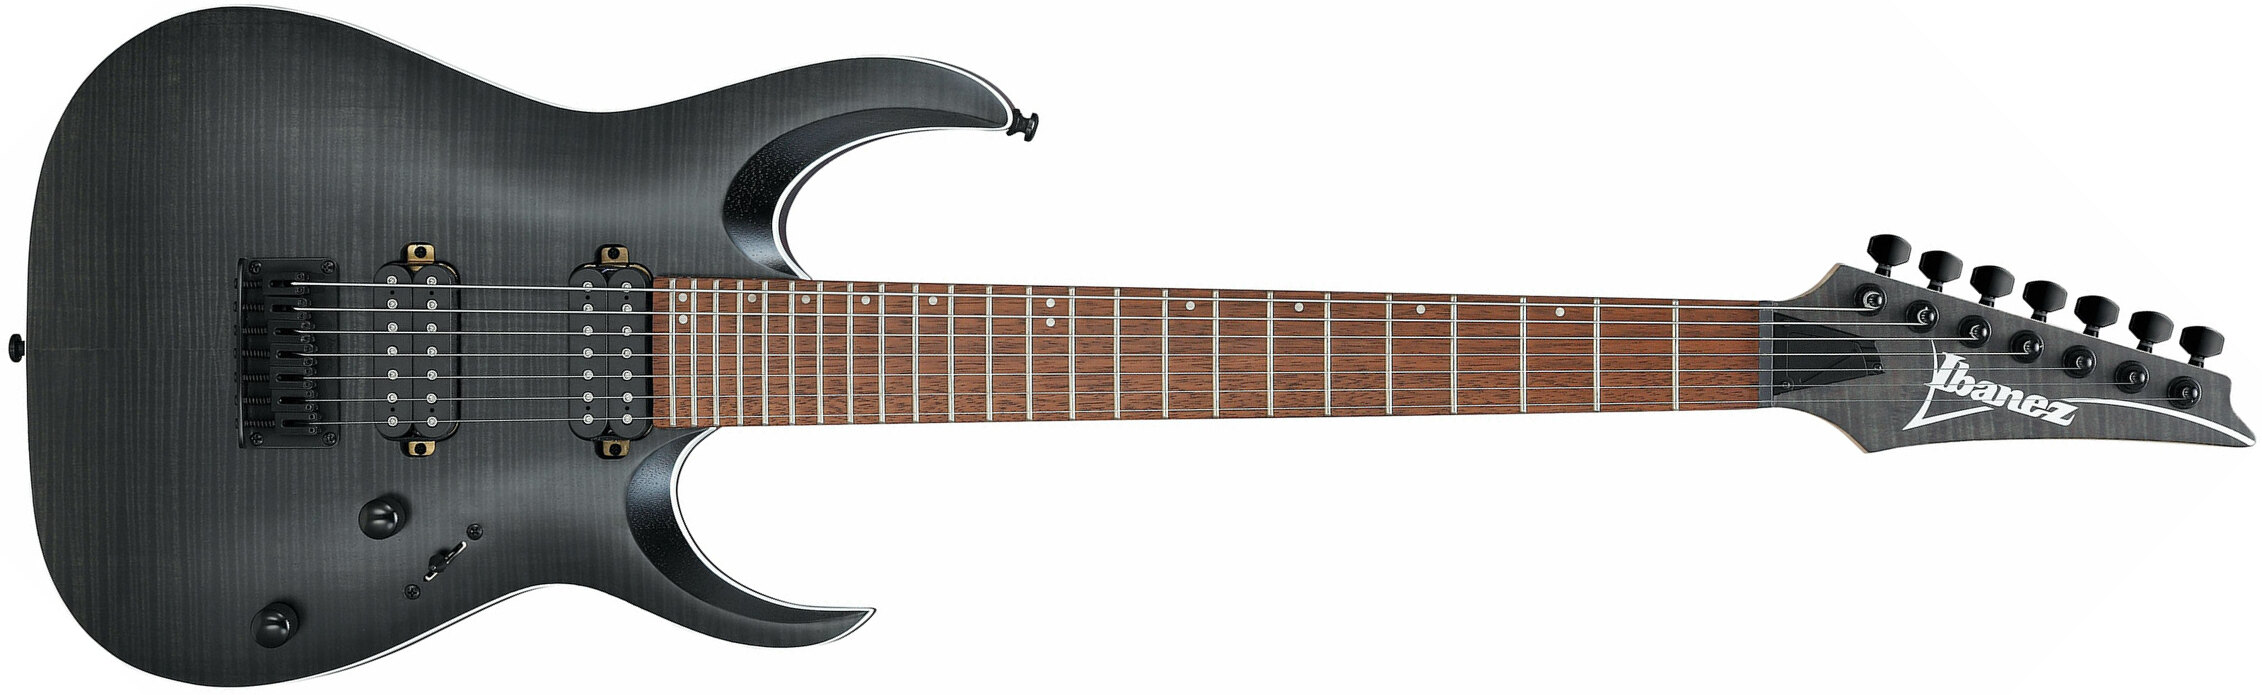 Ibanez Rga742fm Tgf Standard Hh Ht Jat - Transparent Gray Flat - Guitarra eléctrica de 7 cuerdas - Main picture